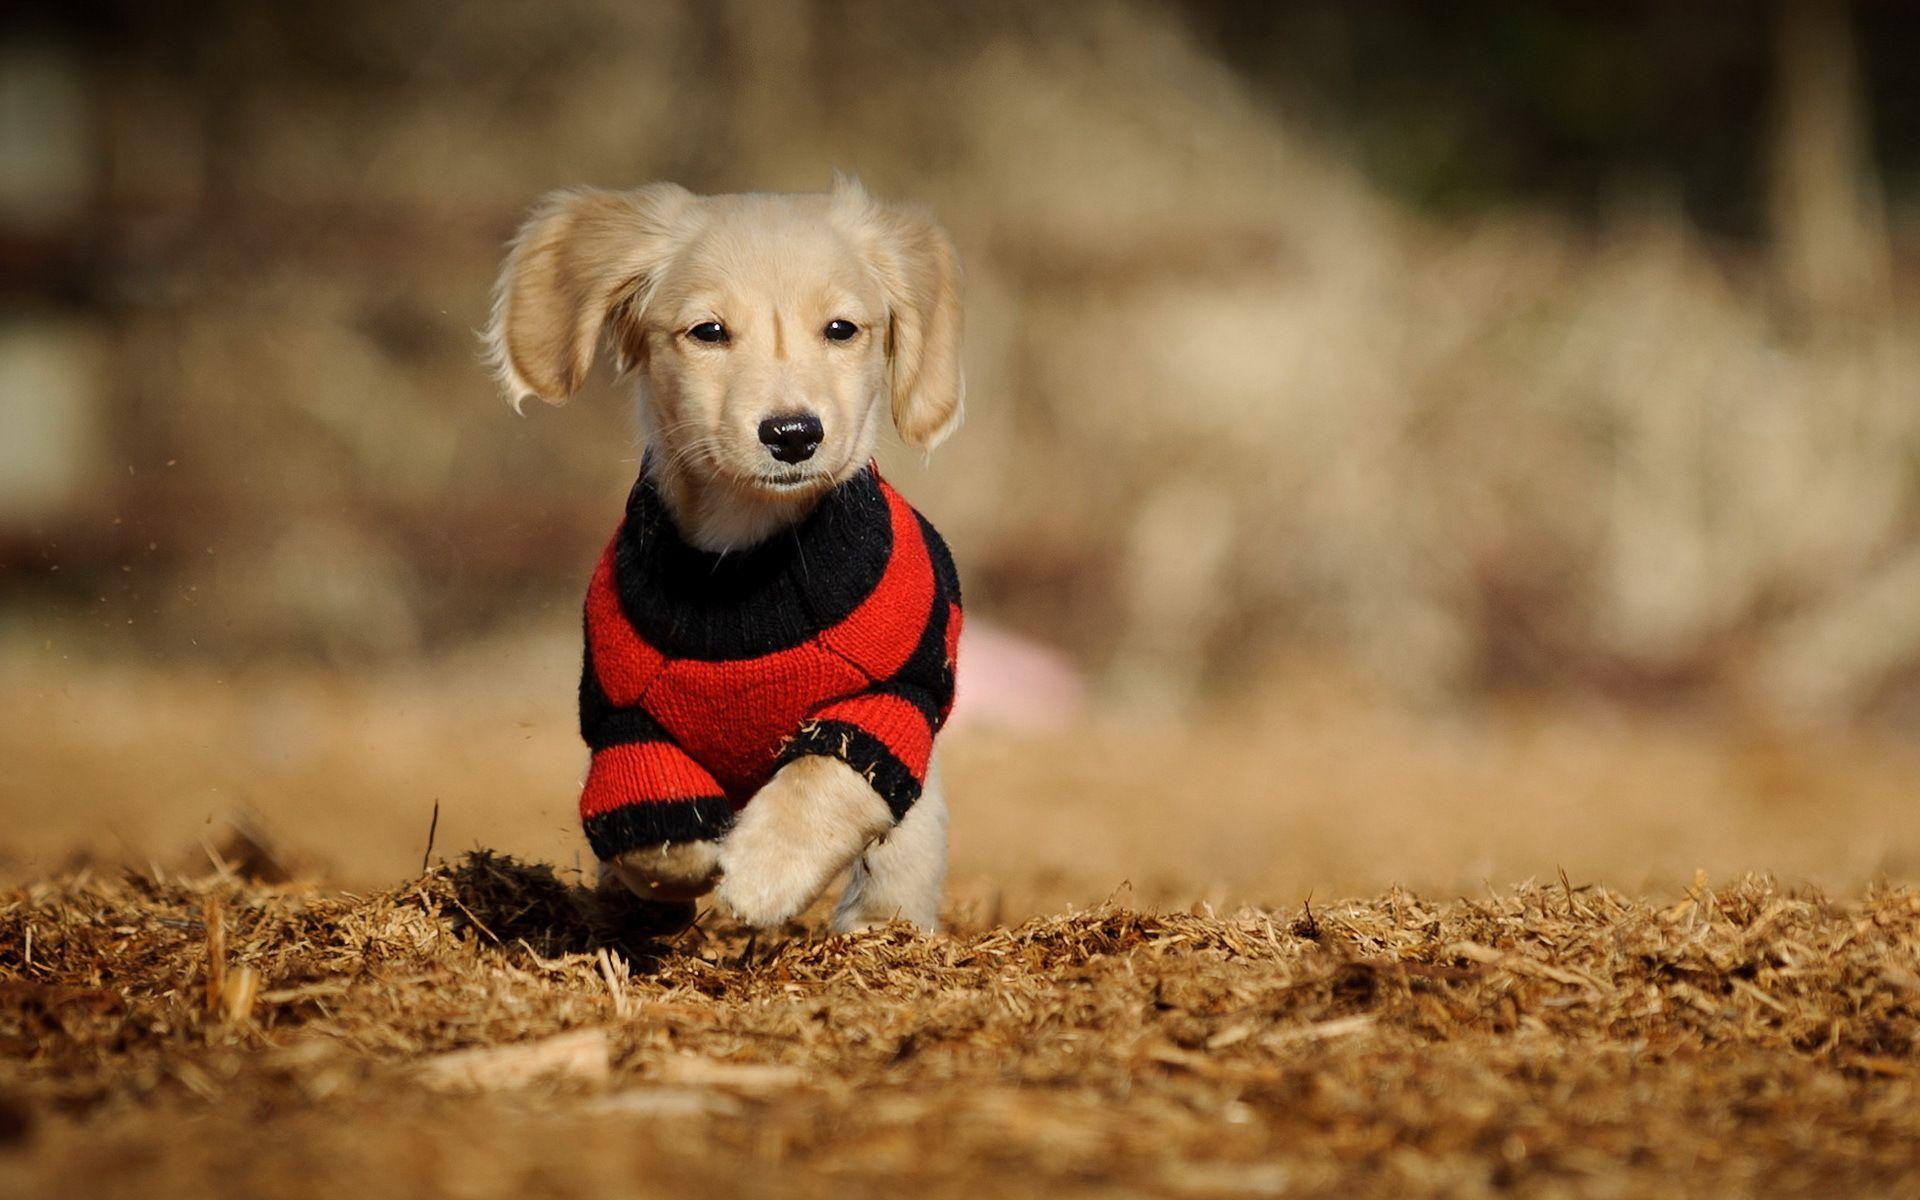 Cute Baby Dog Image HQ